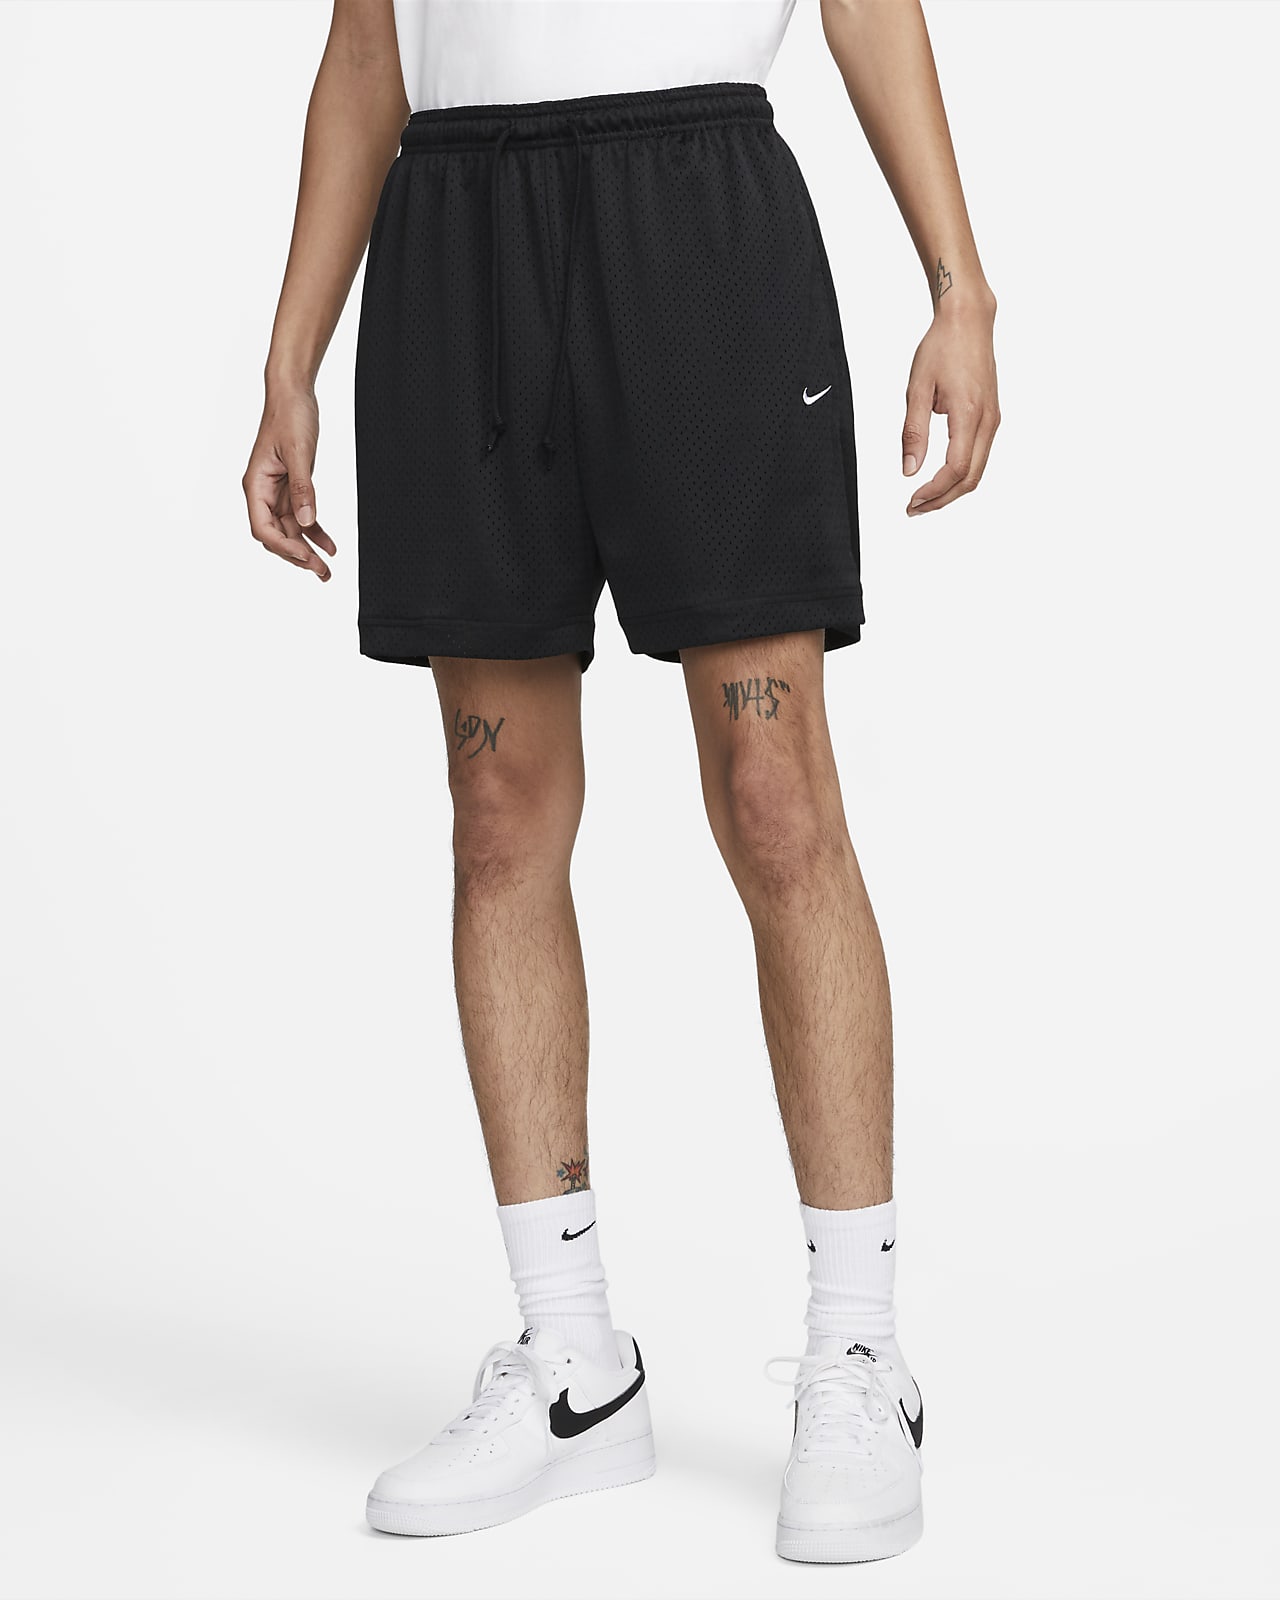 Classic Vintage Nike Basketball Shorts - Men's Size M